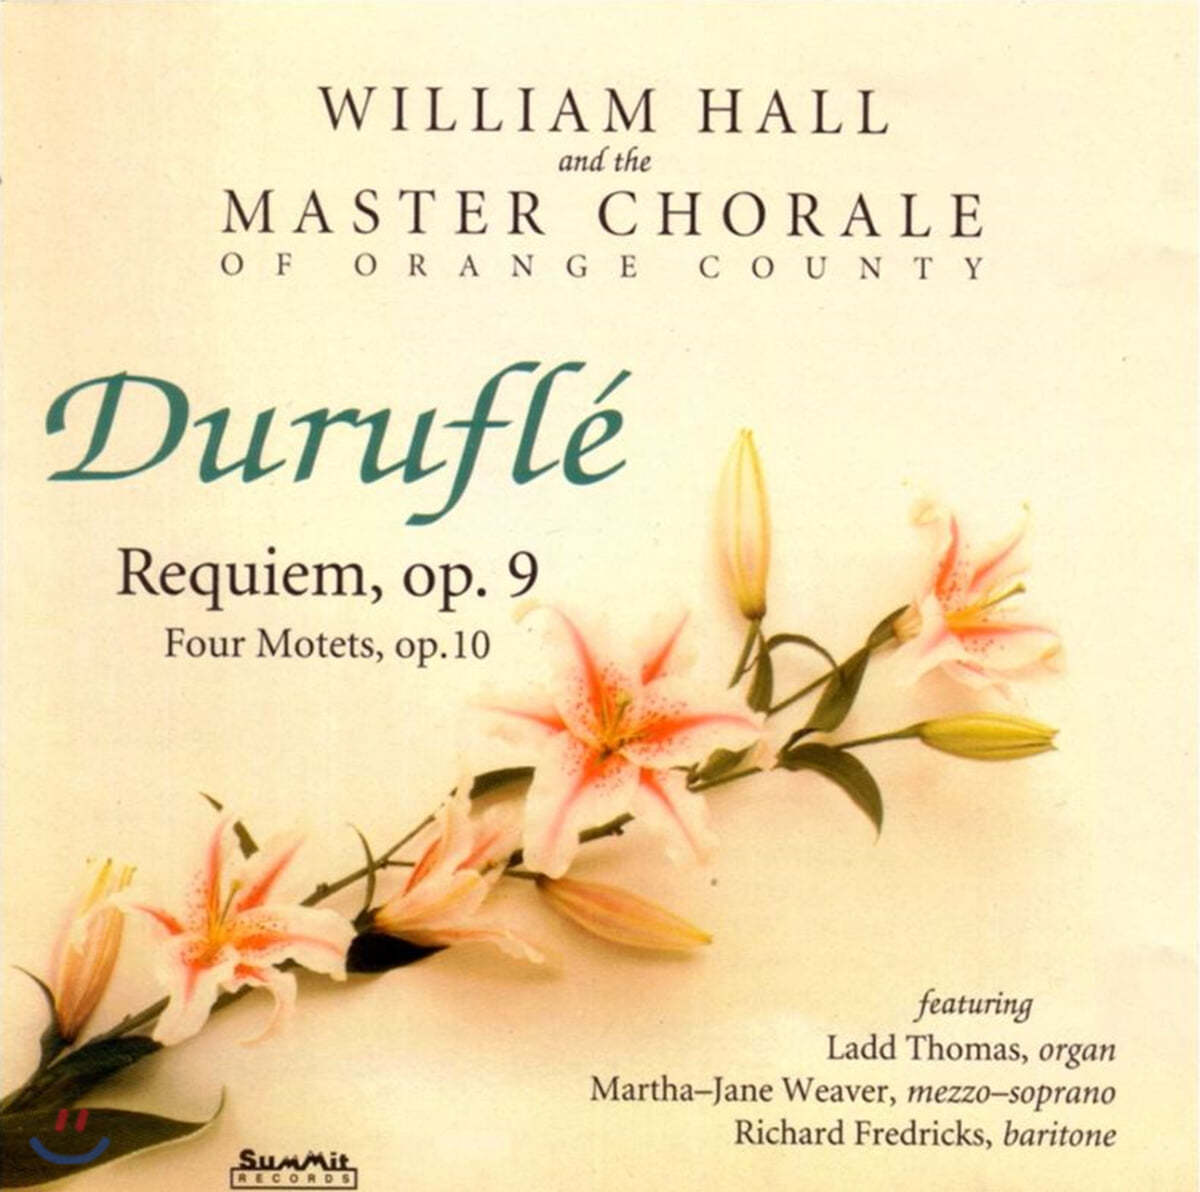 William Hall 뒤뤼플레: 레퀴엠, 모데트 (Durufle: Requiem & Motets)